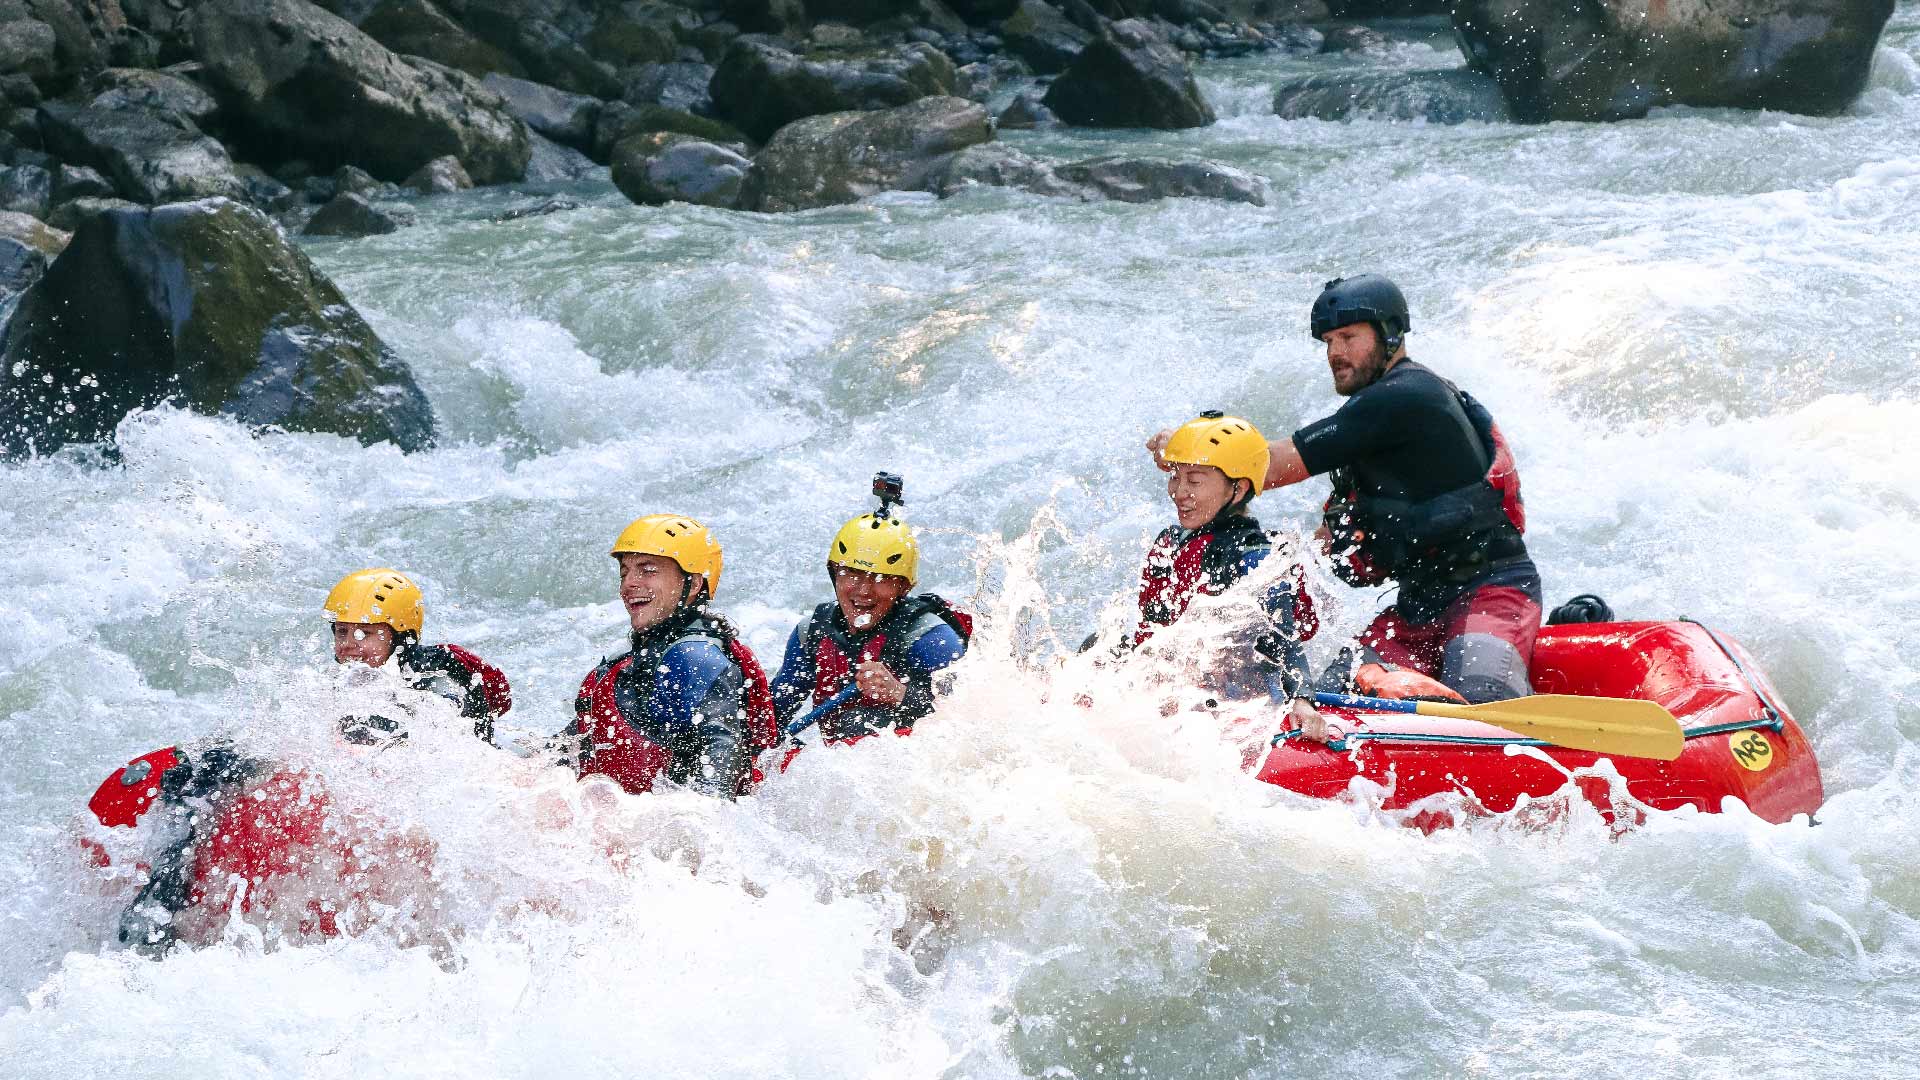 river-rafting-sommer-adventure-spass-wasser